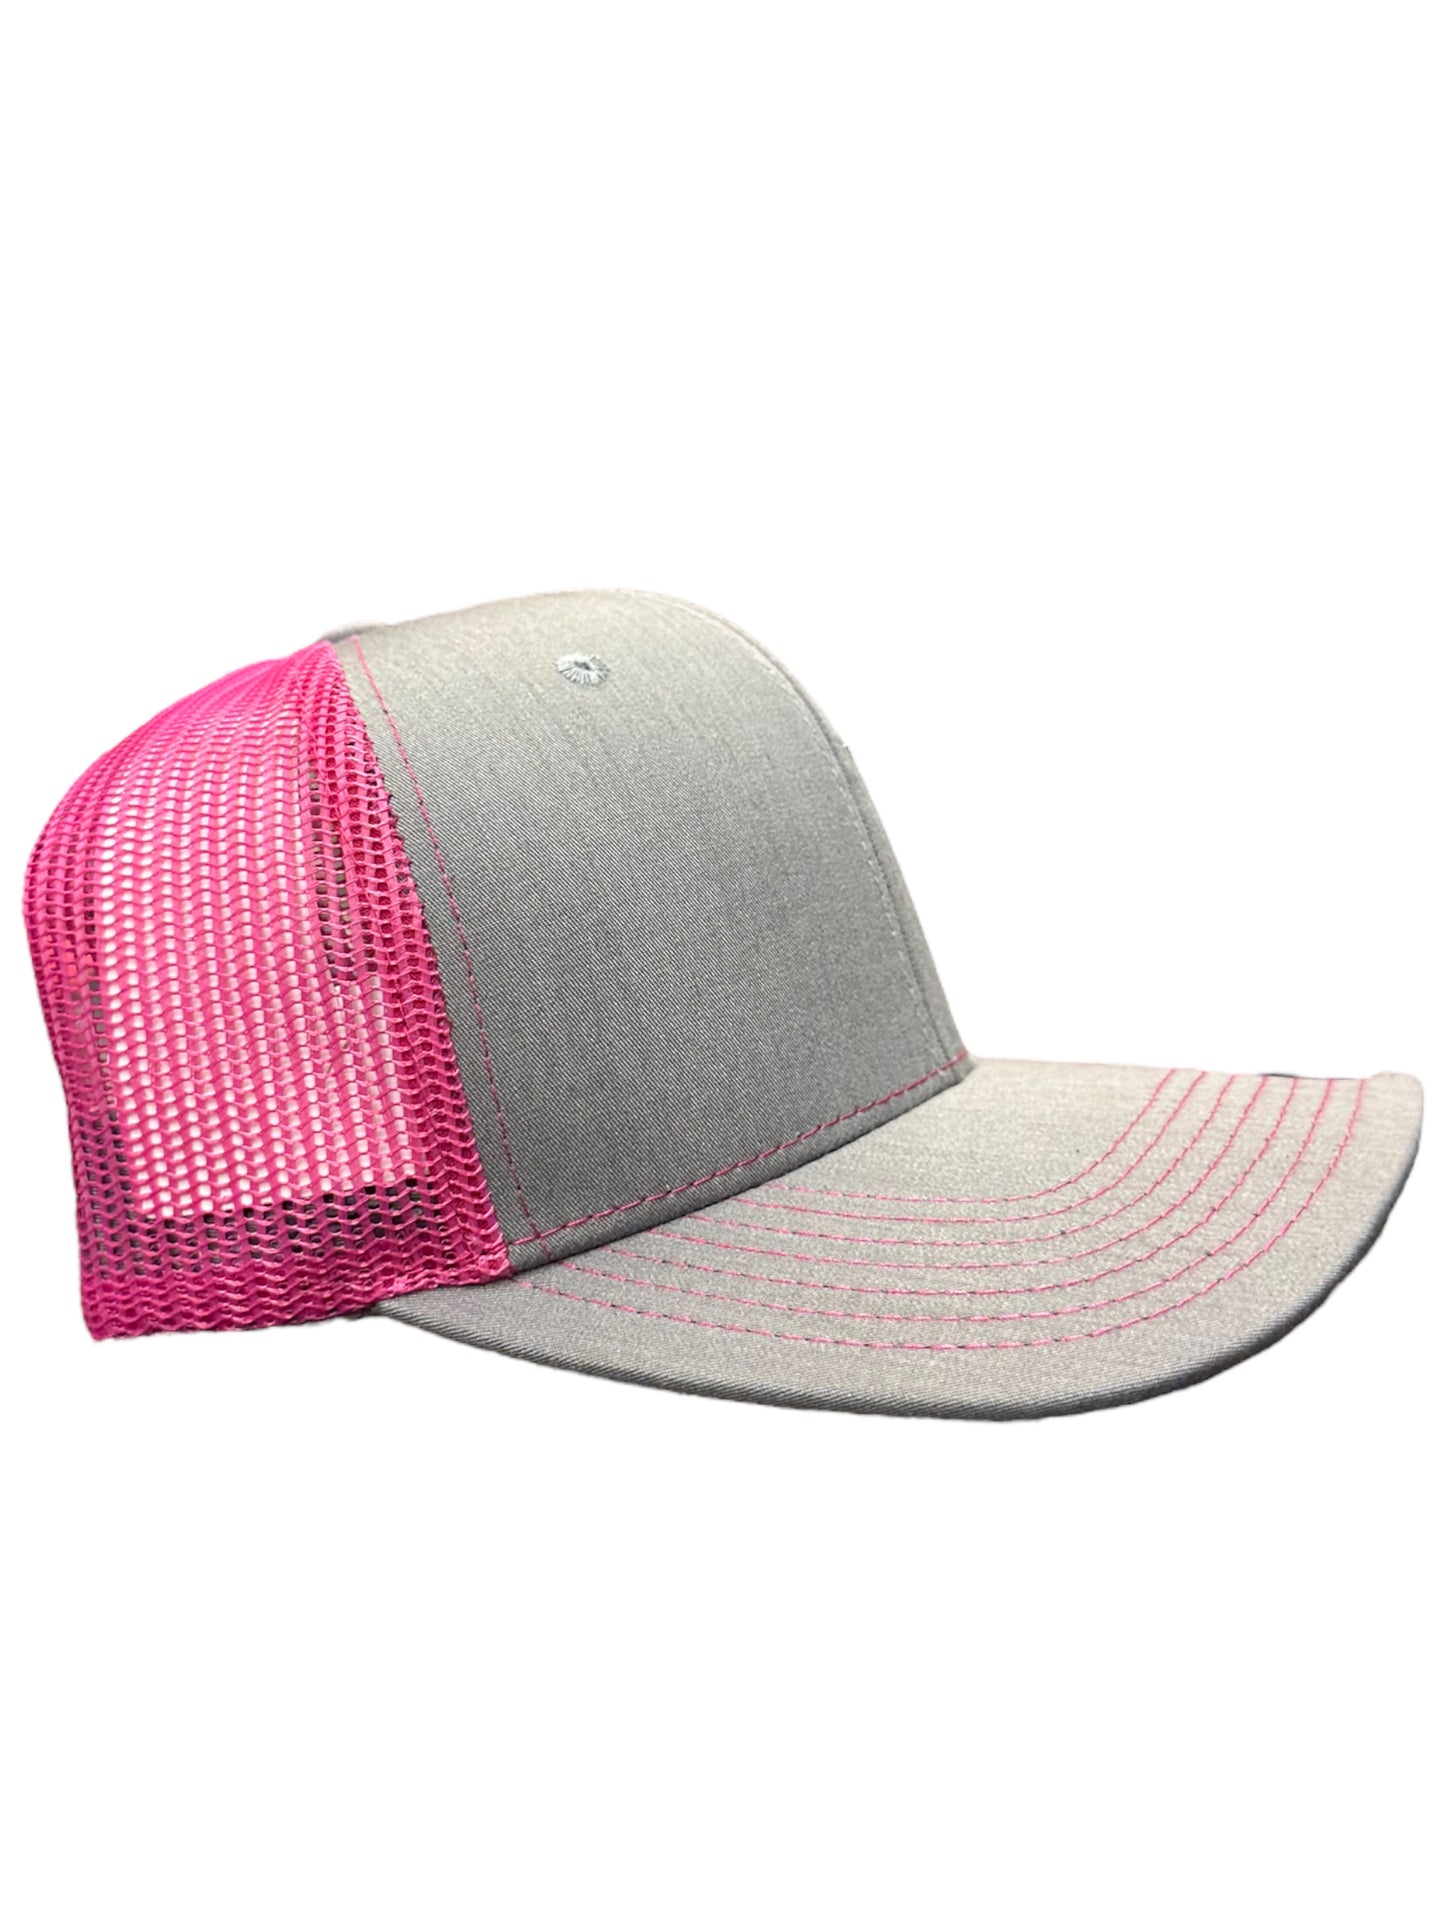 Grey and hot pink trucker SnapBack hats